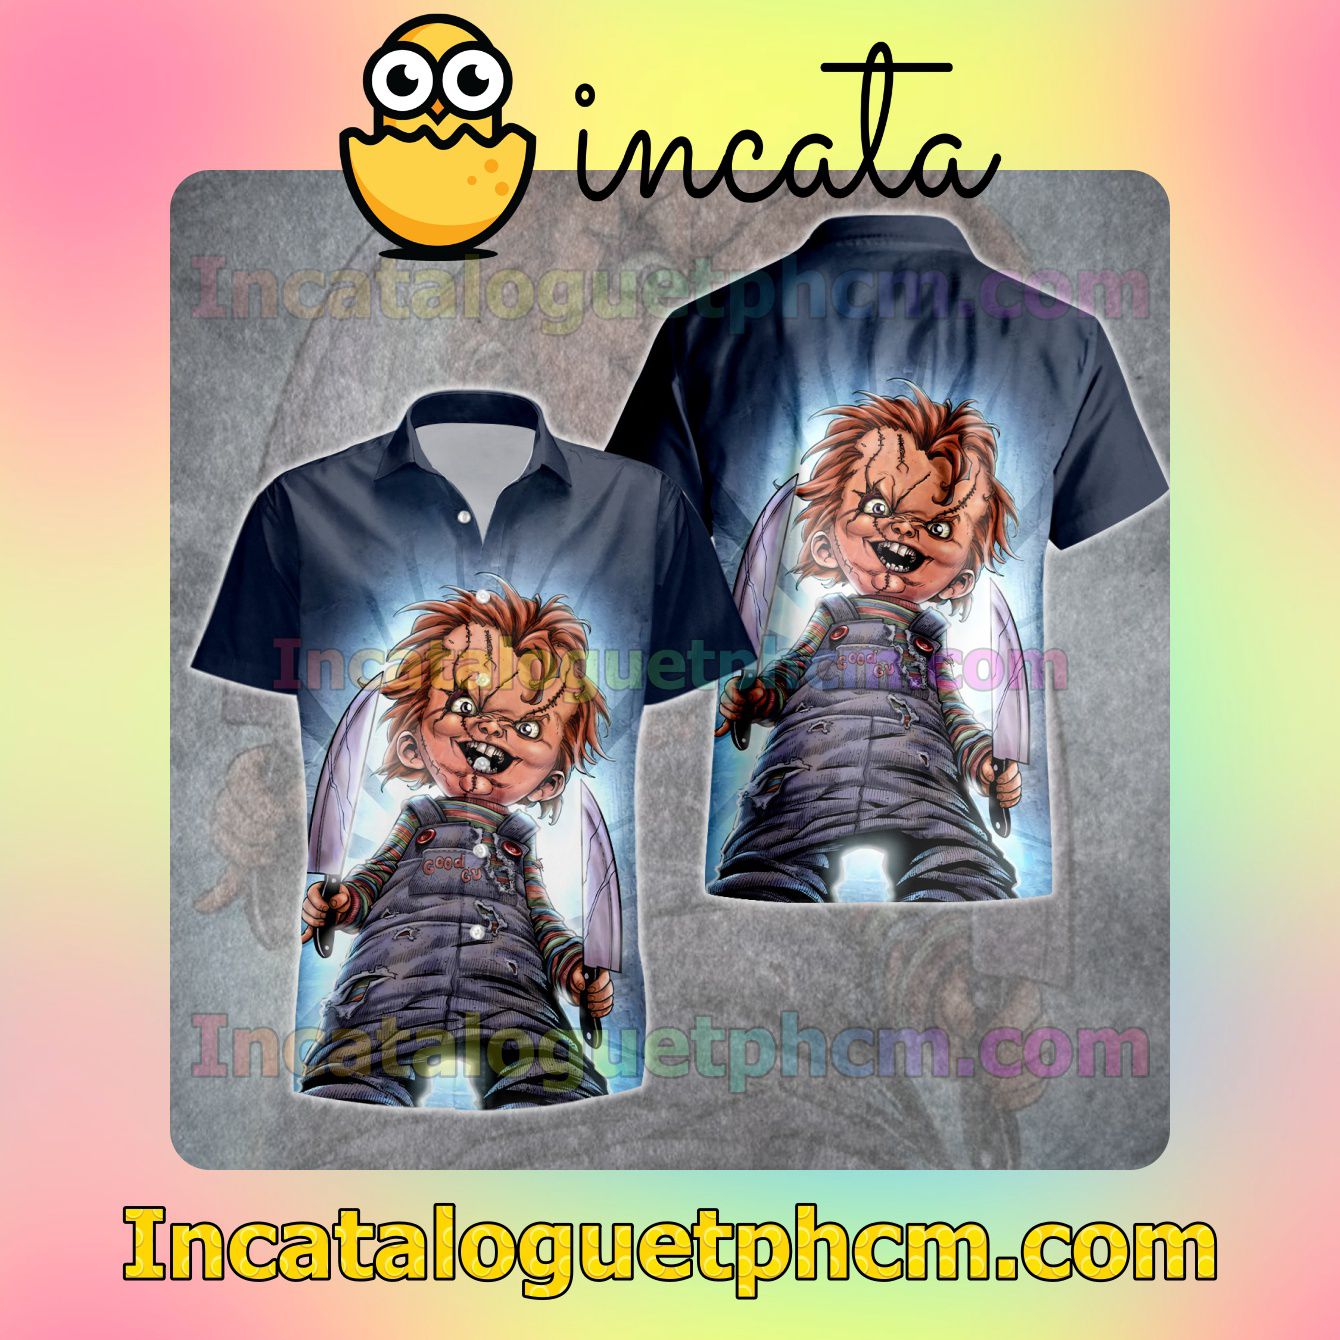 Chucky Horror Halloween Unisex Shirts